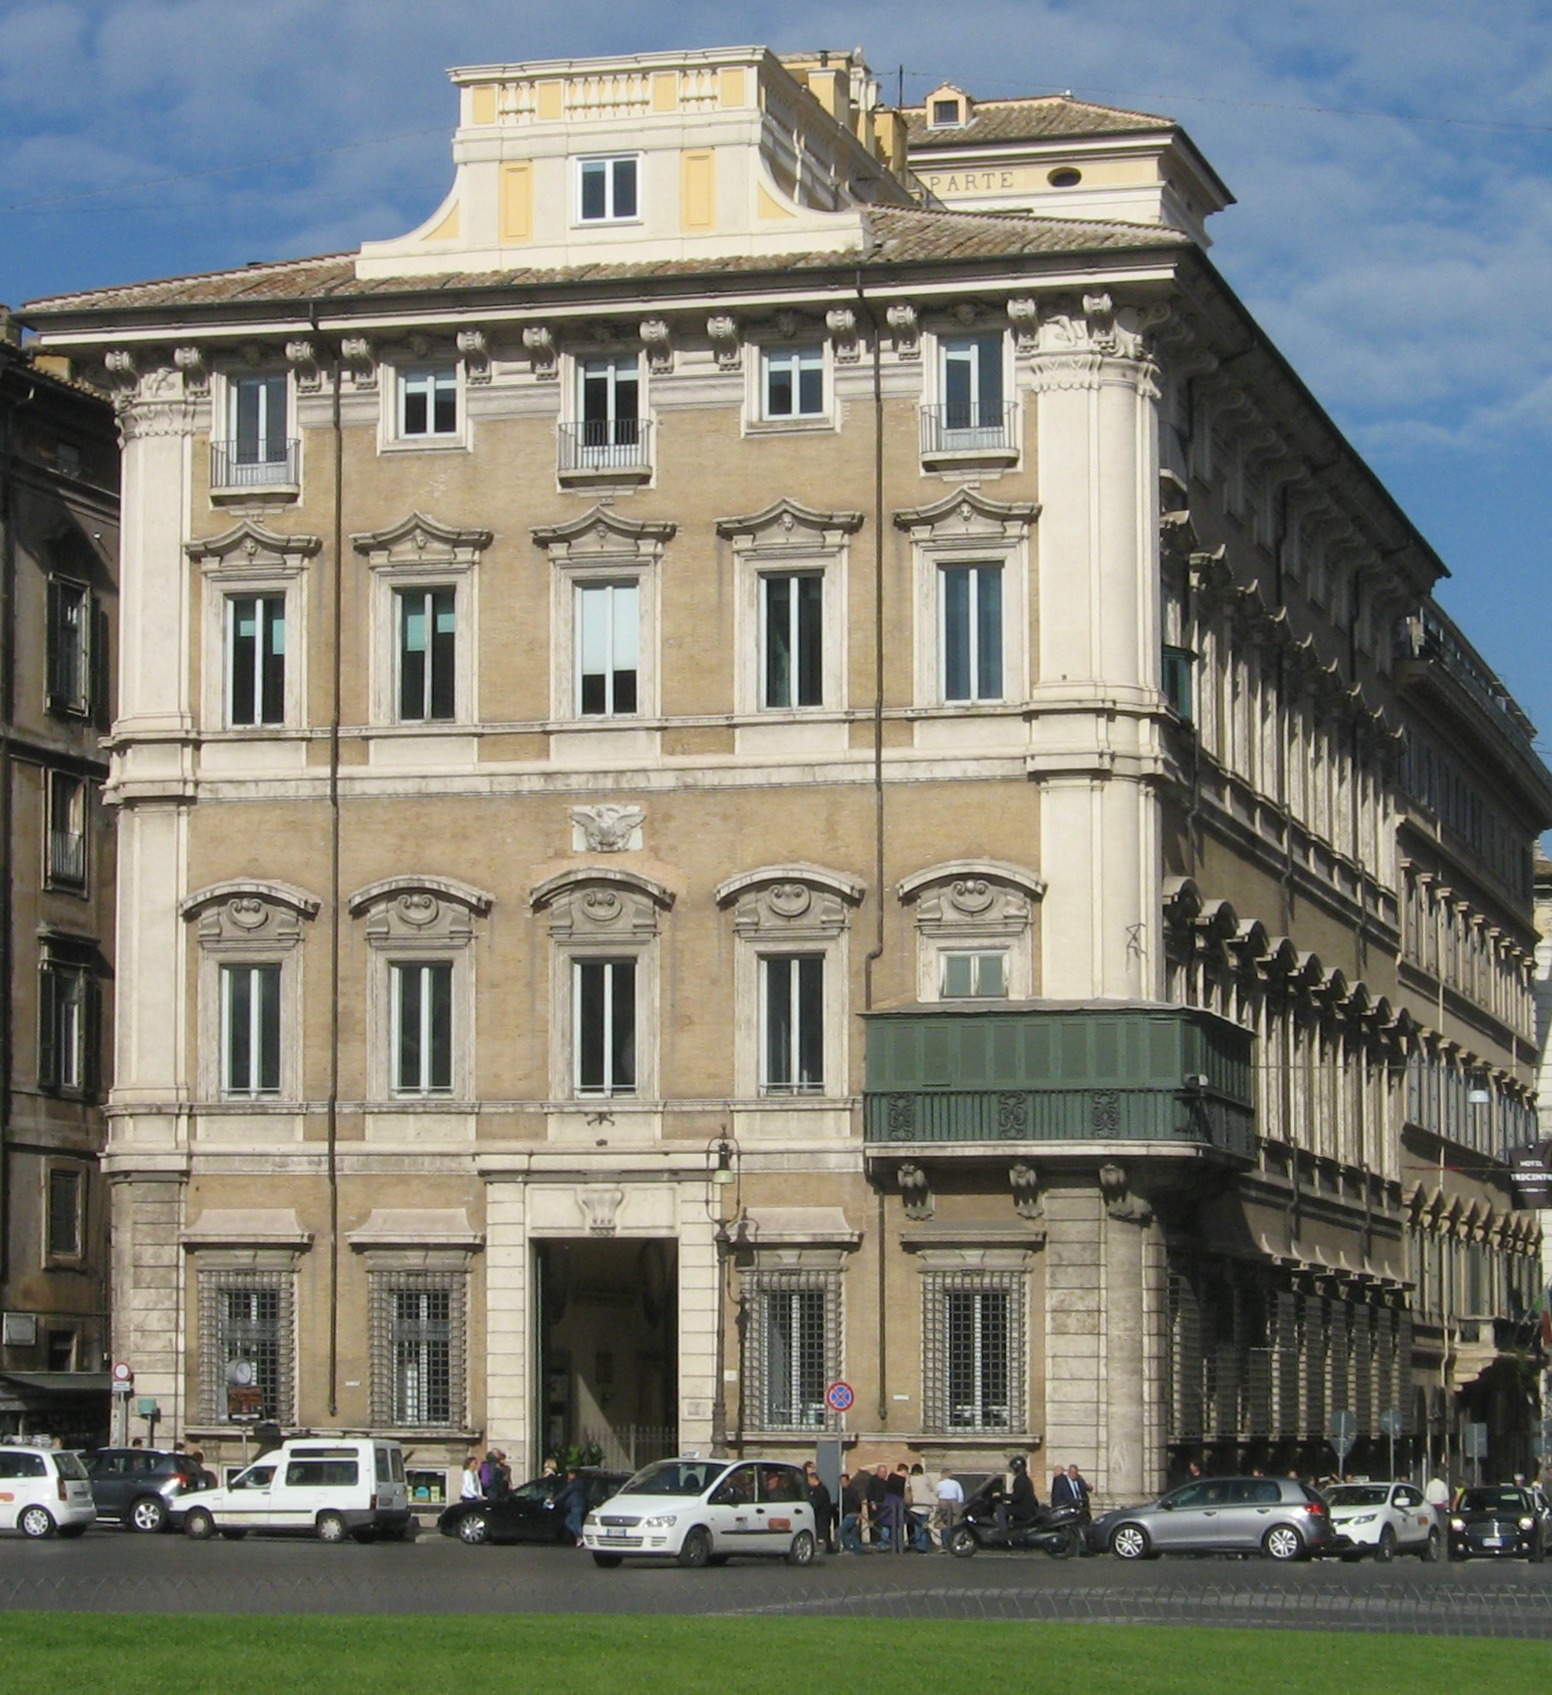 Palazzo Bonaparte (now Palazzo Misciatelli), home of Letizia Bonaparte, mother of Napoleon.